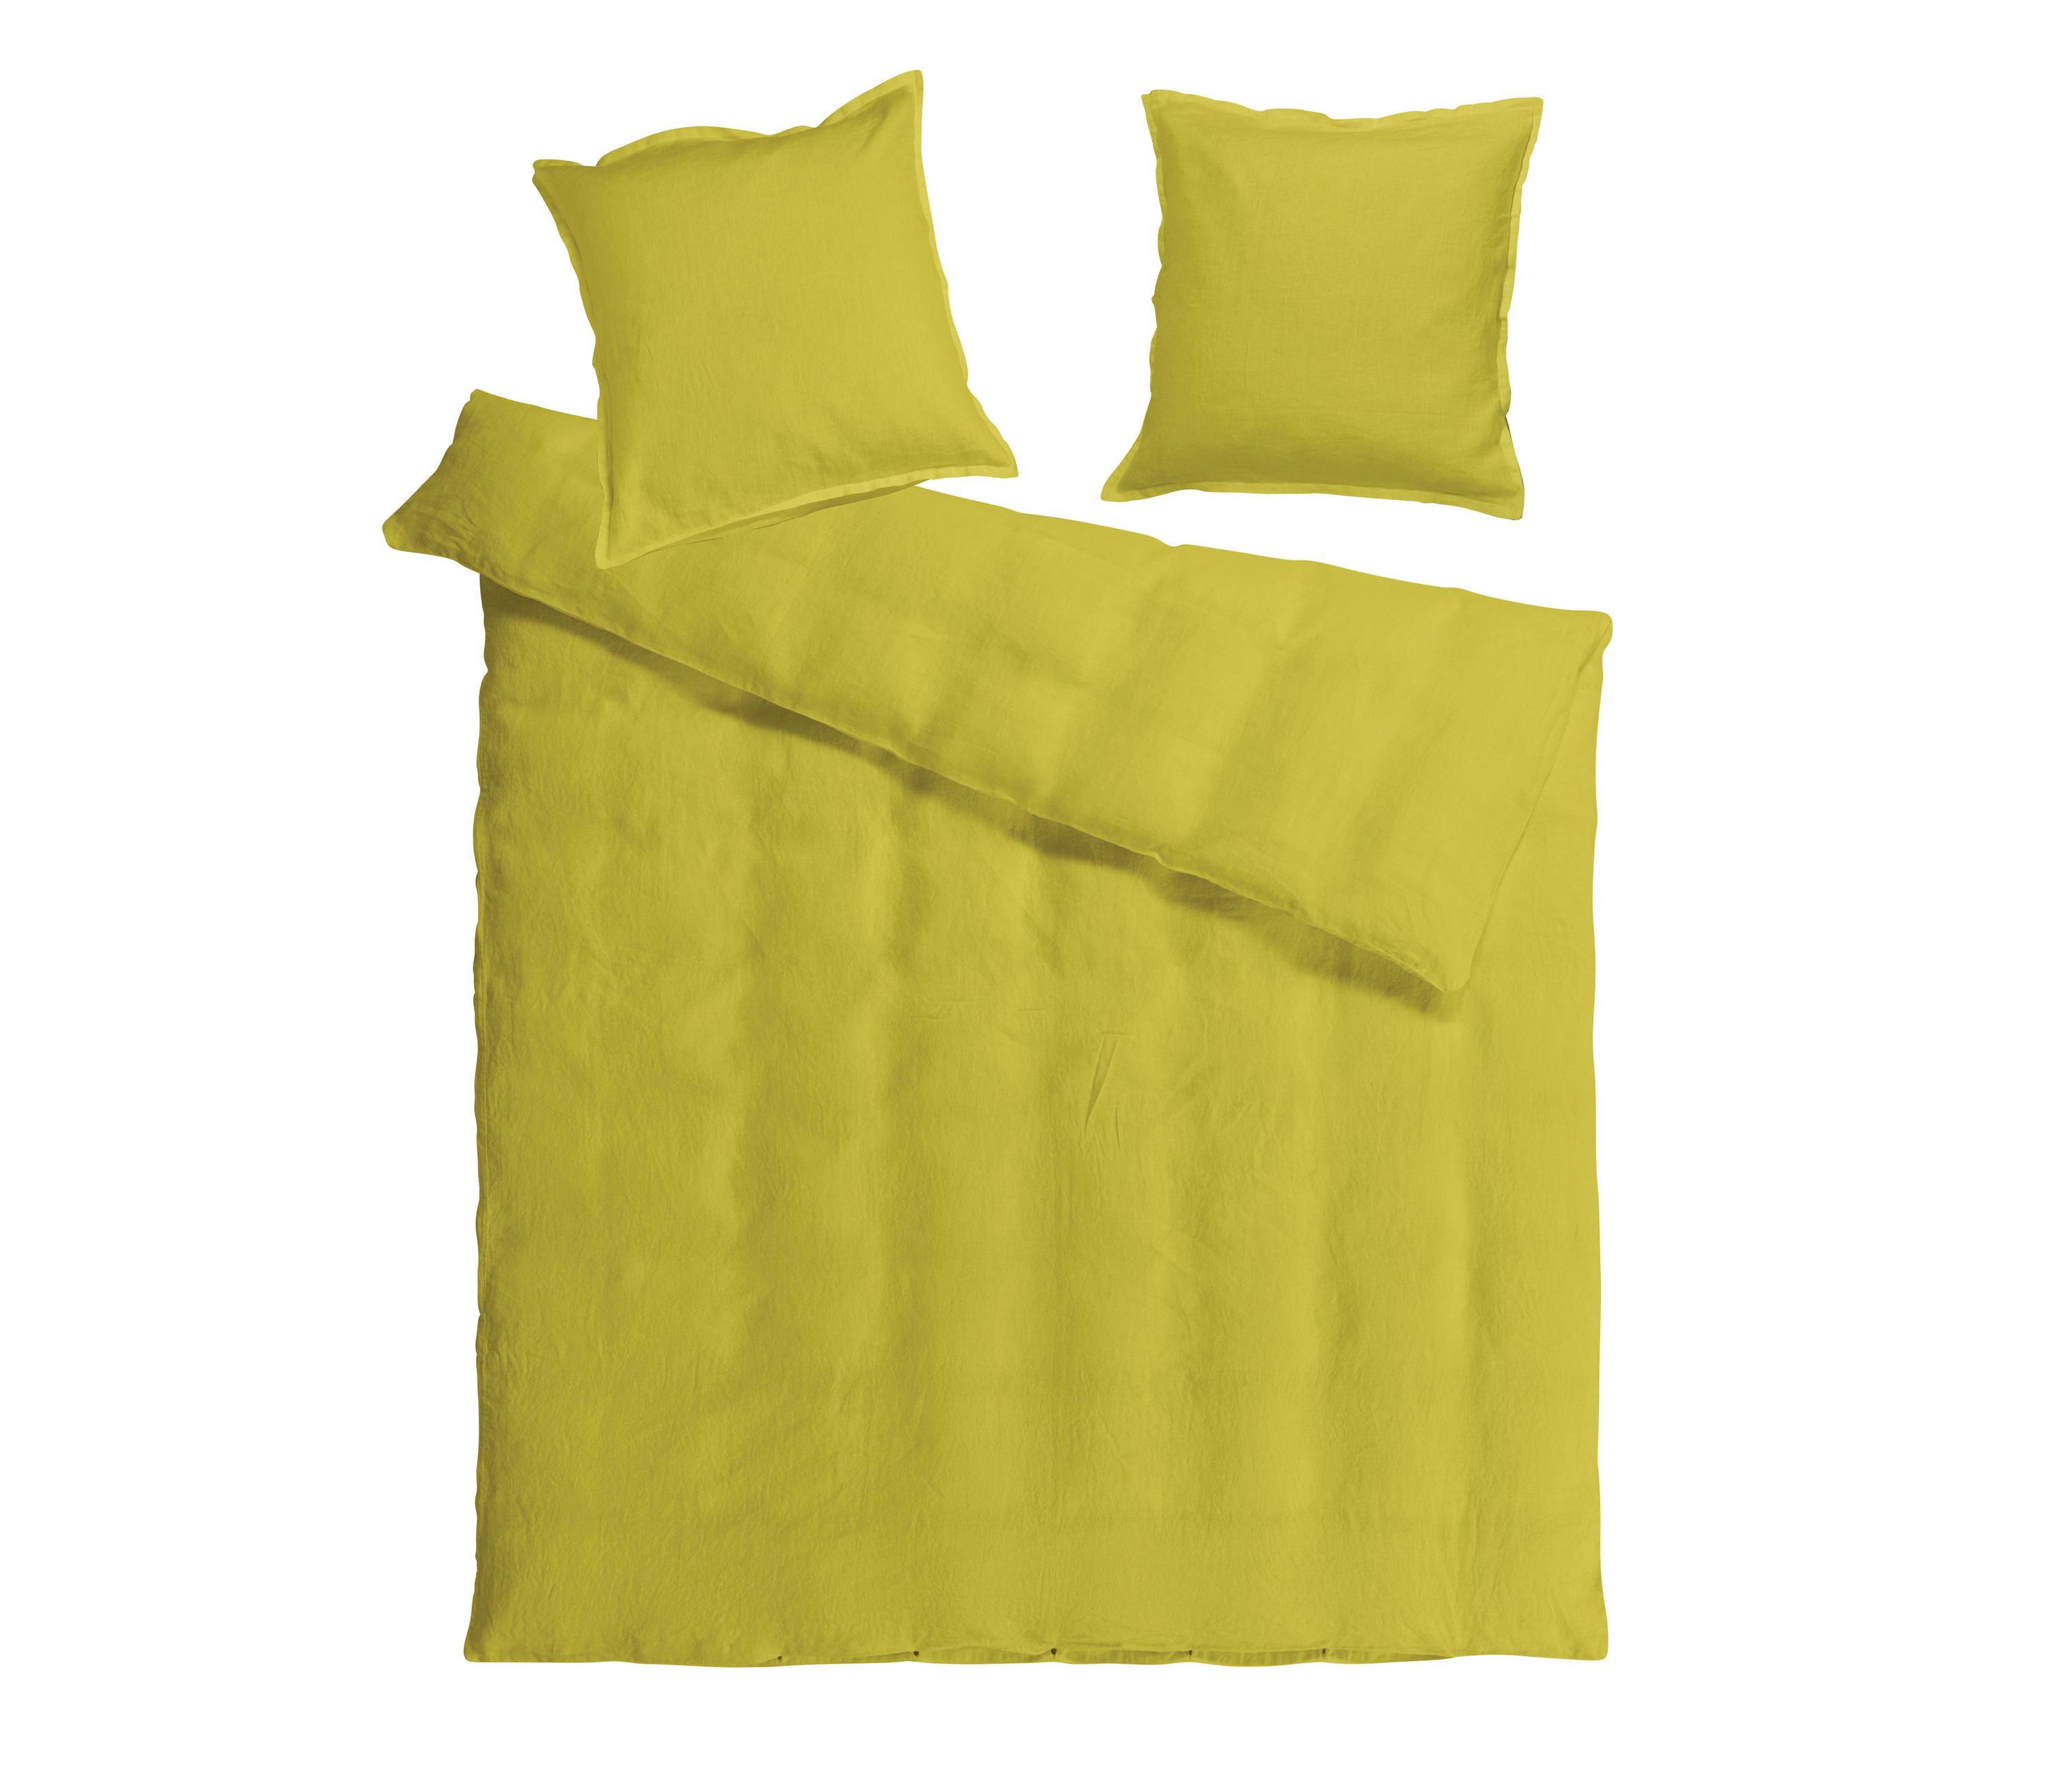 Lindau Bed linen & designer furniture | Architonic